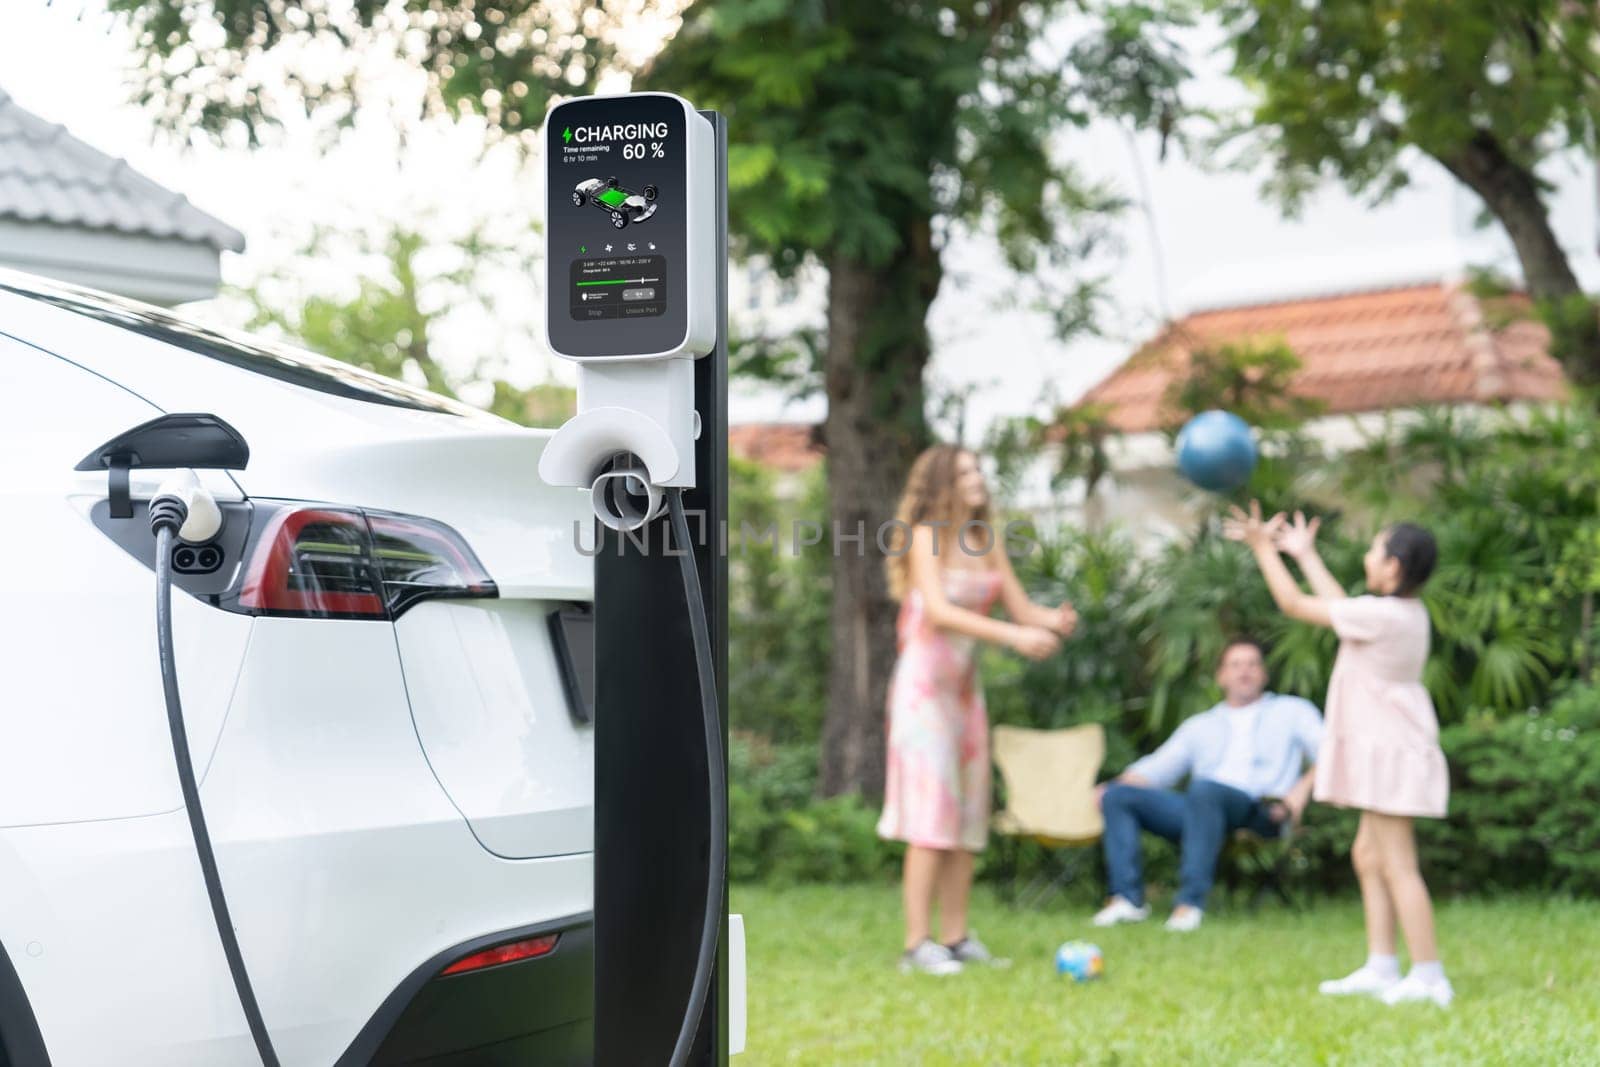 Focus EV station recharging battery for EV car on blurred family. Synchronos by biancoblue